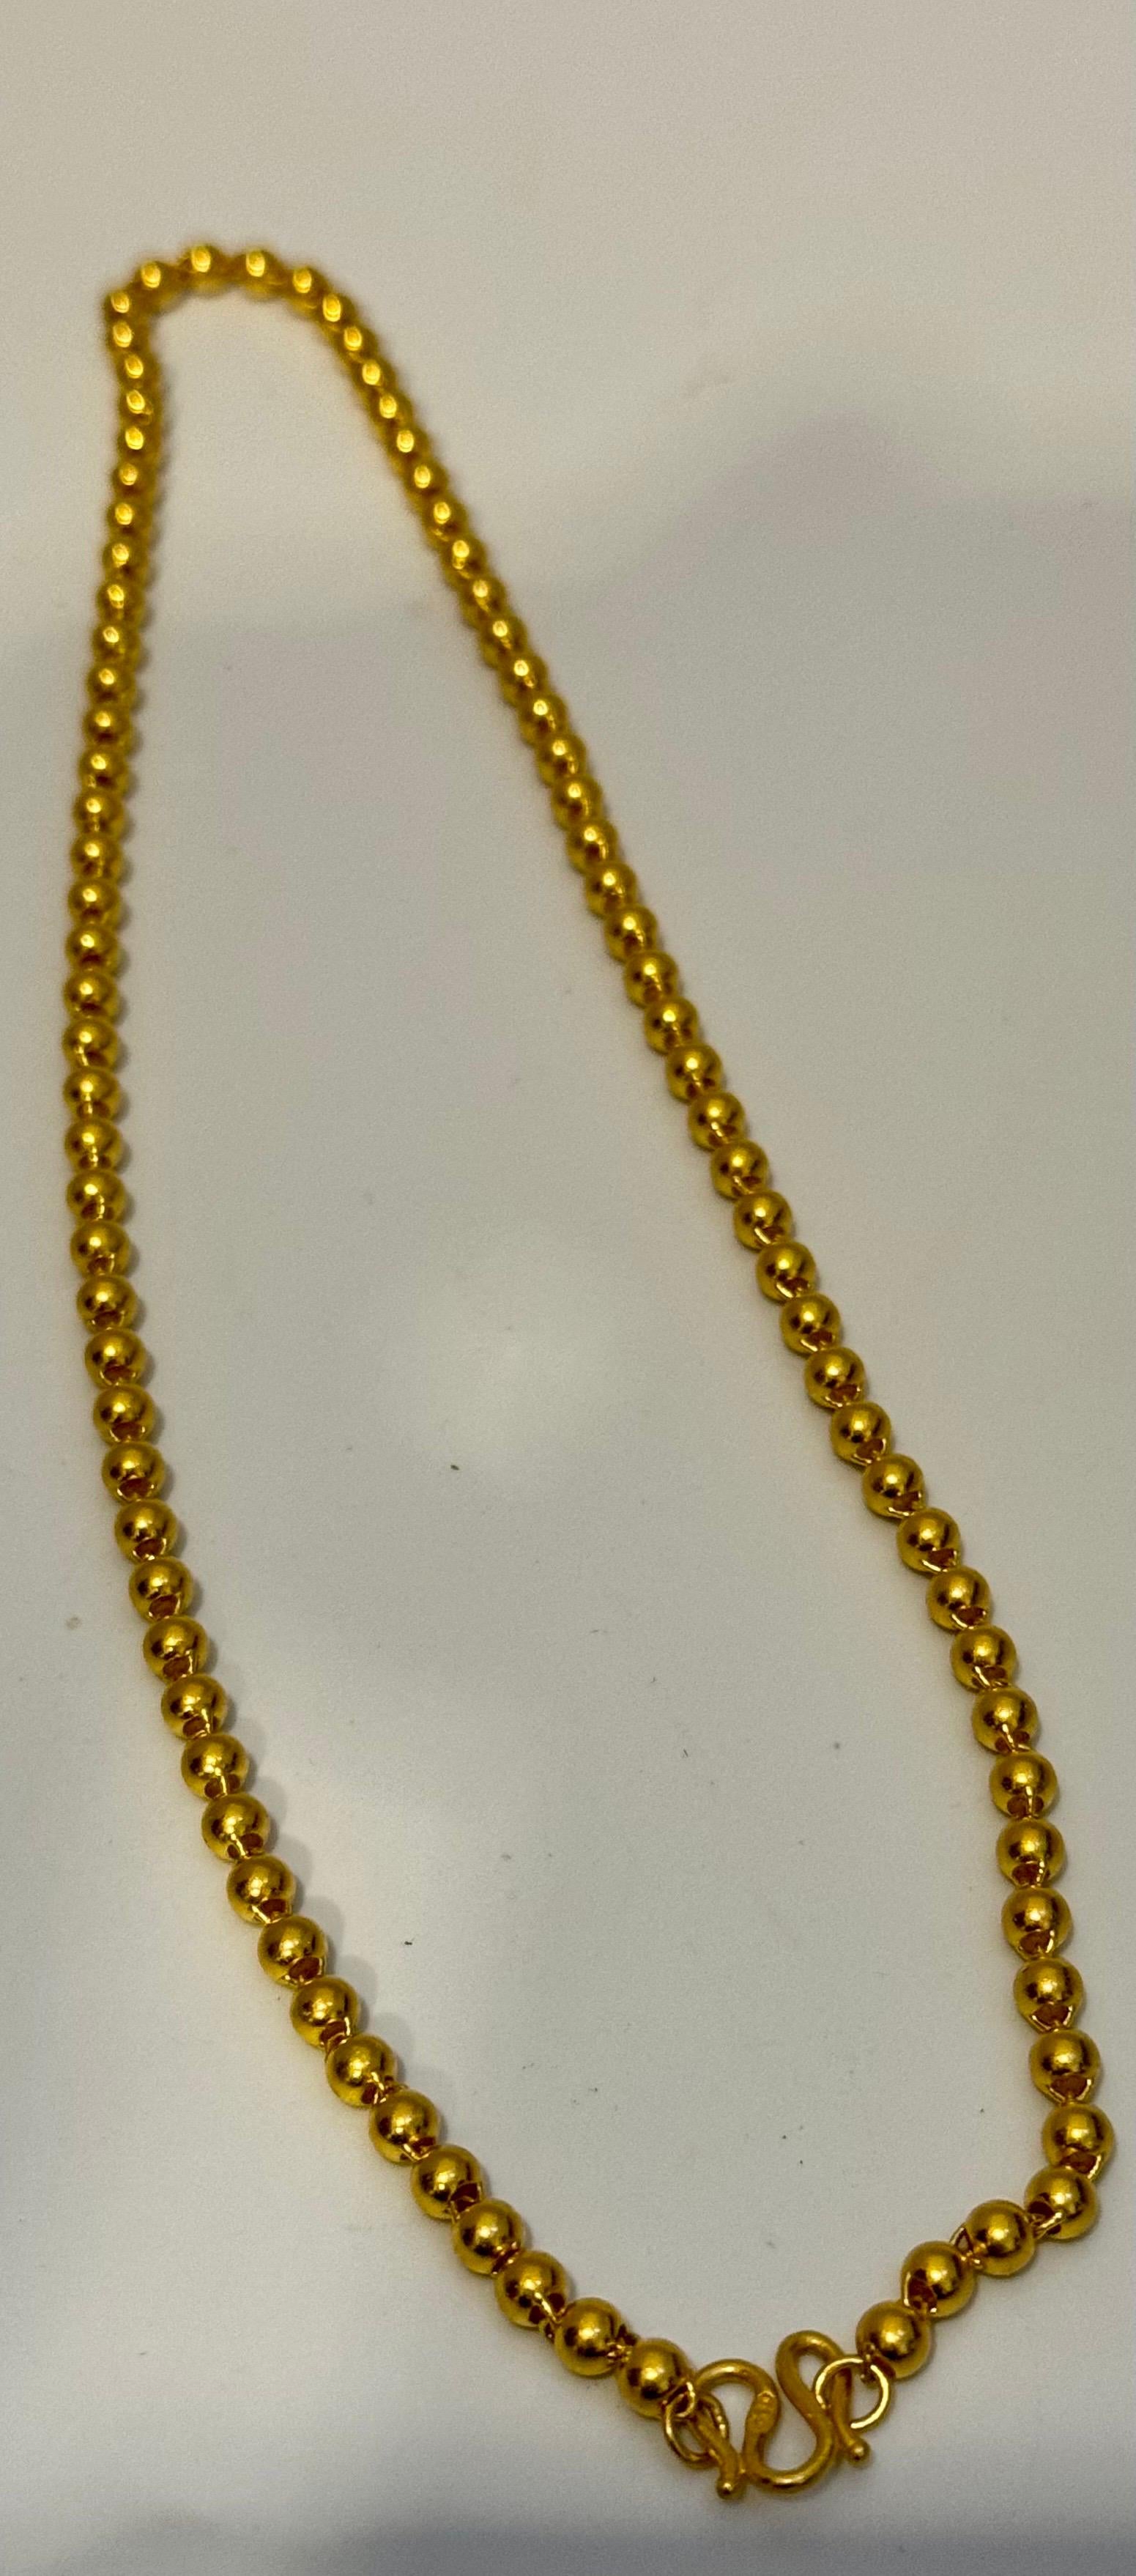 Vintage 19 Gm Pure 24 Karat Yellow Gold Handmade Ball Chain 17 inch long 2